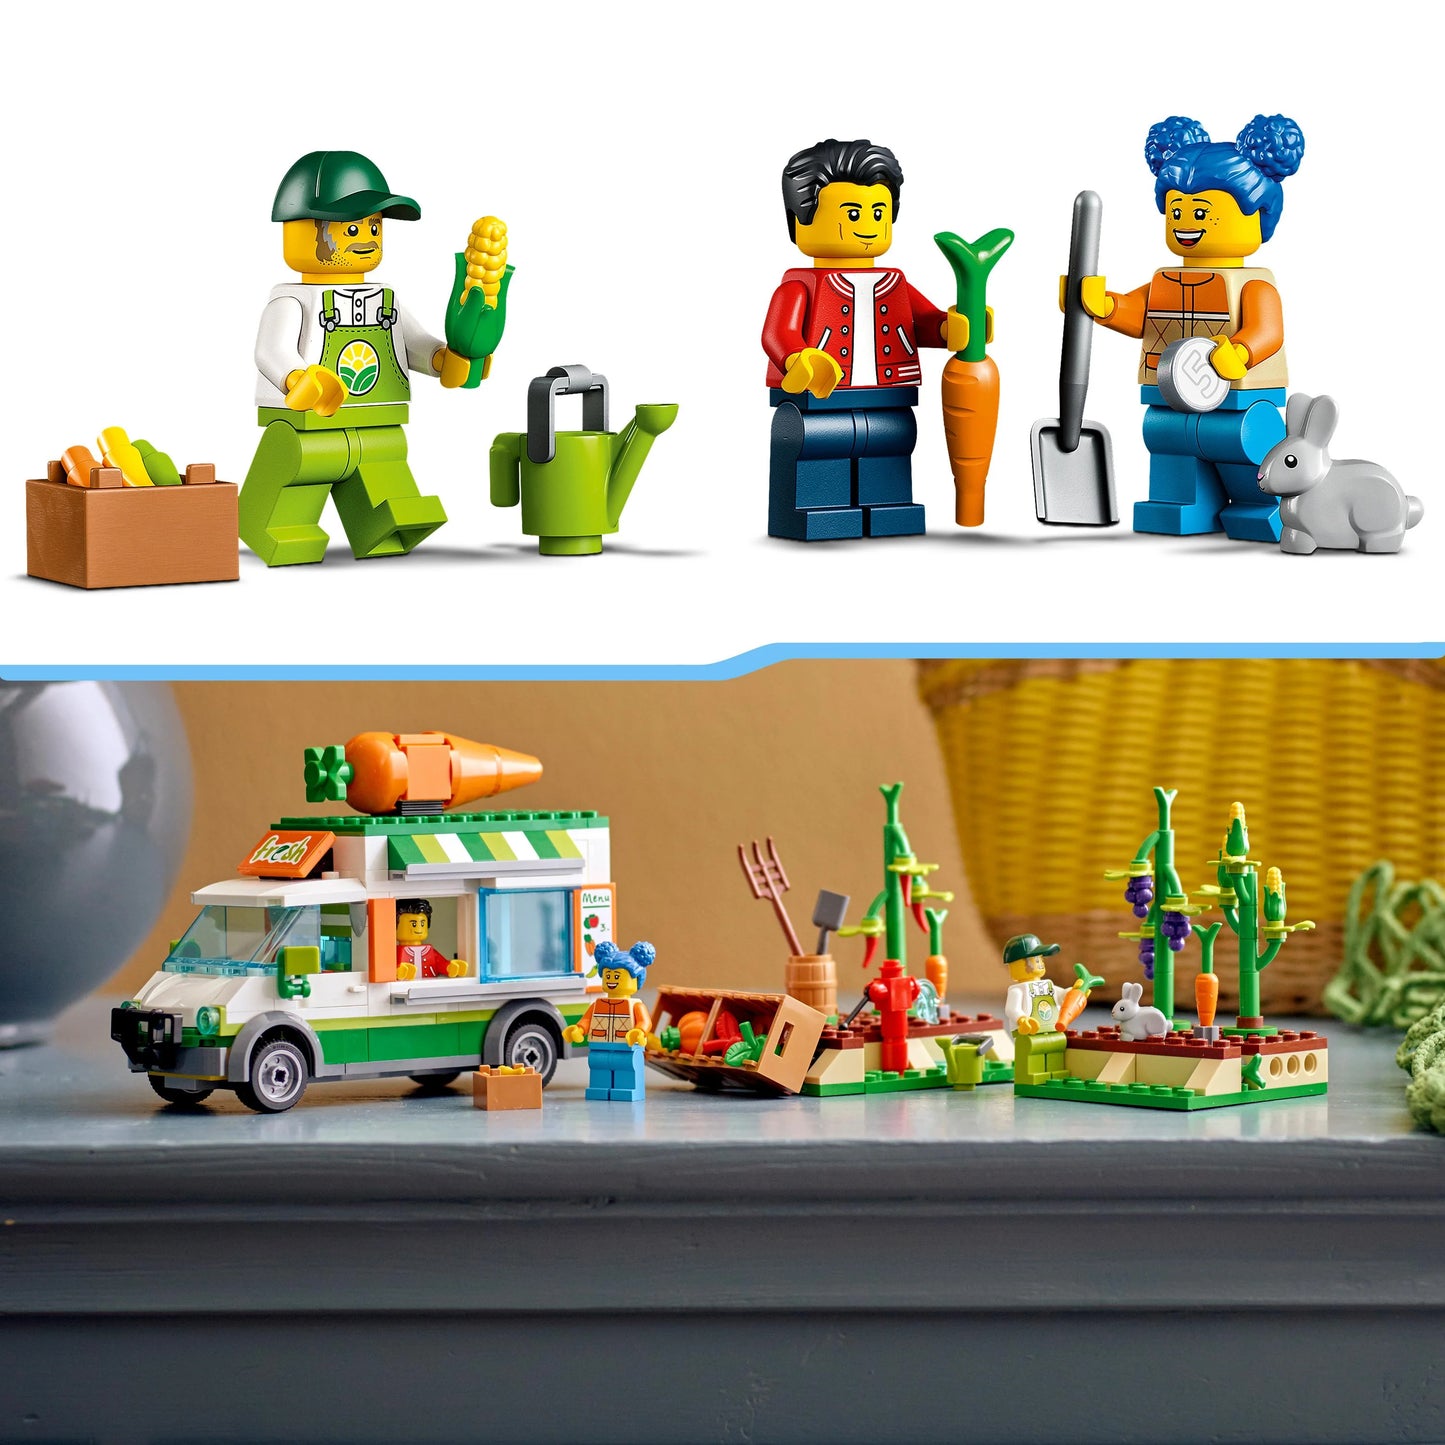 Boerenmarkt wagen-LEGO City